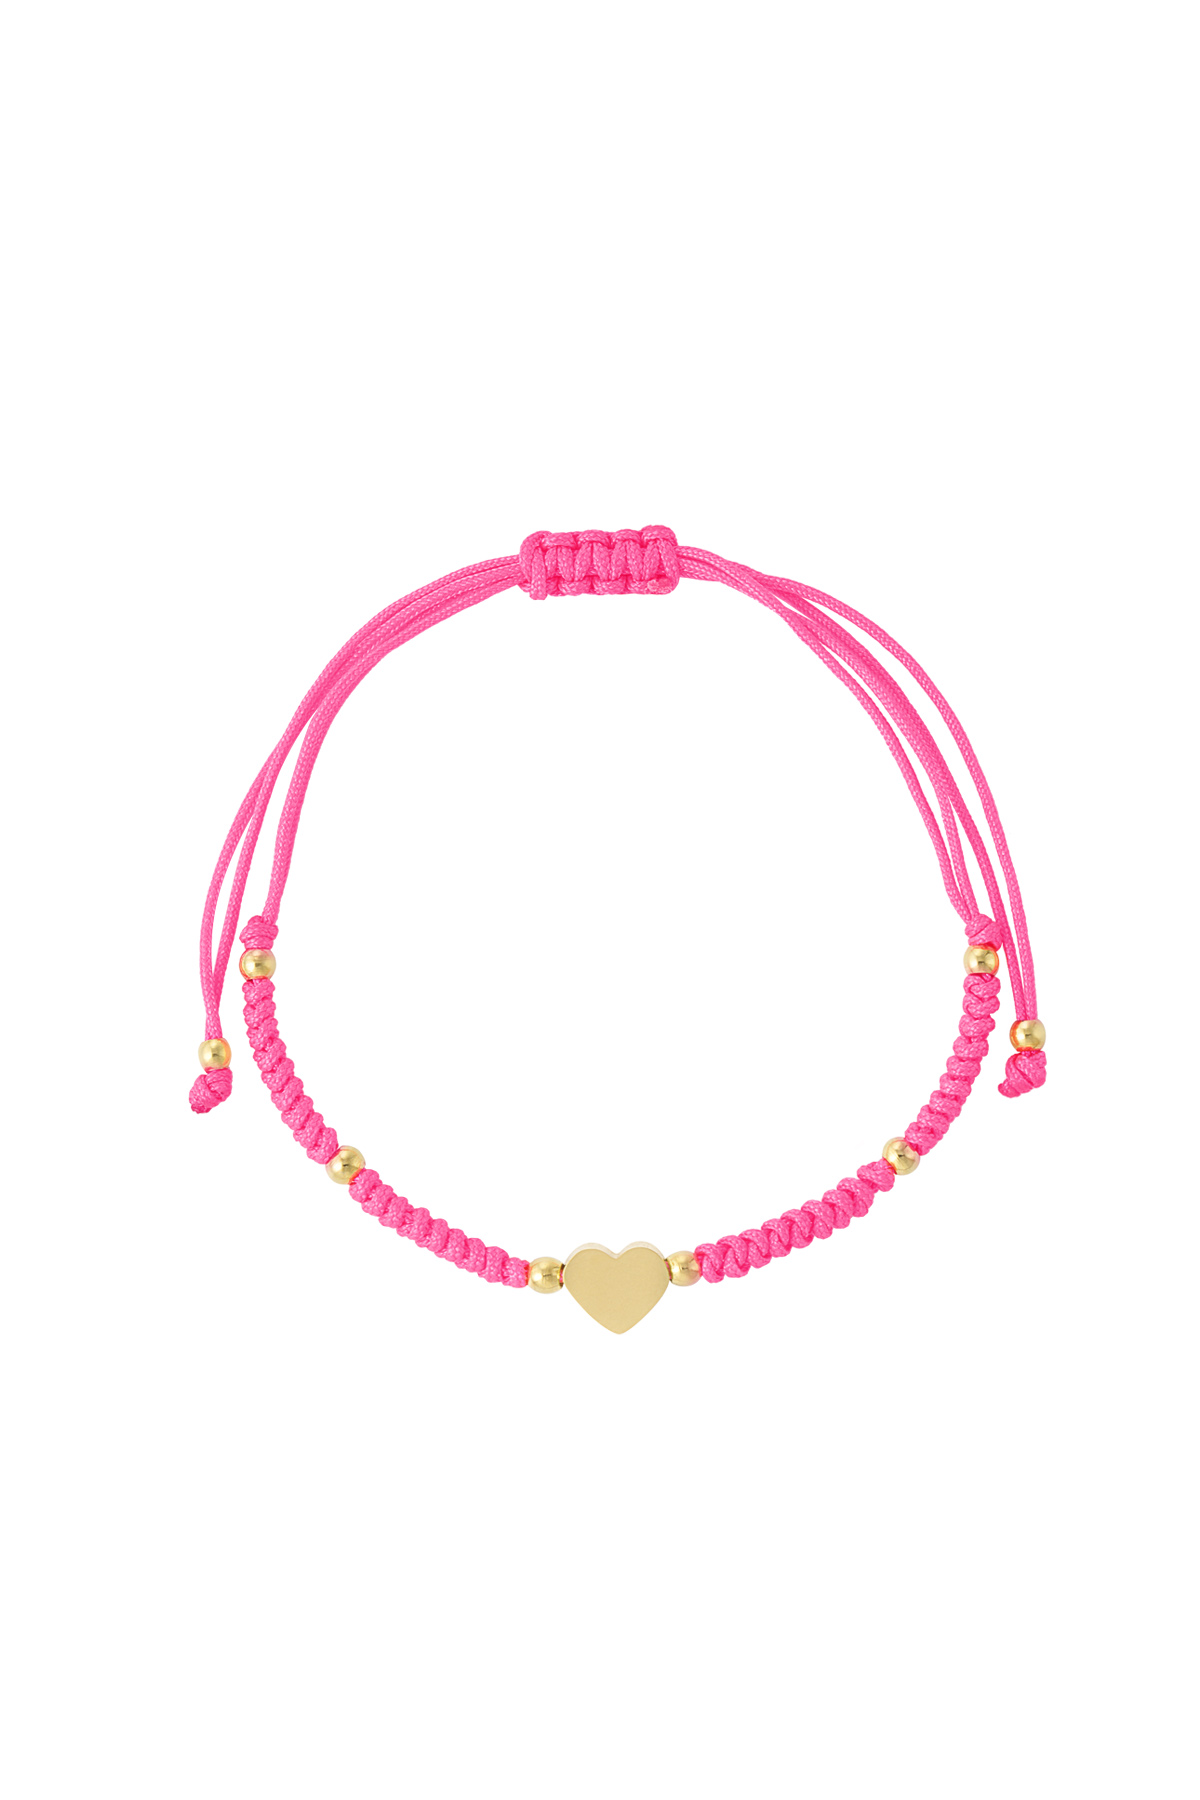 Braided bracelet with heart - fuchsia